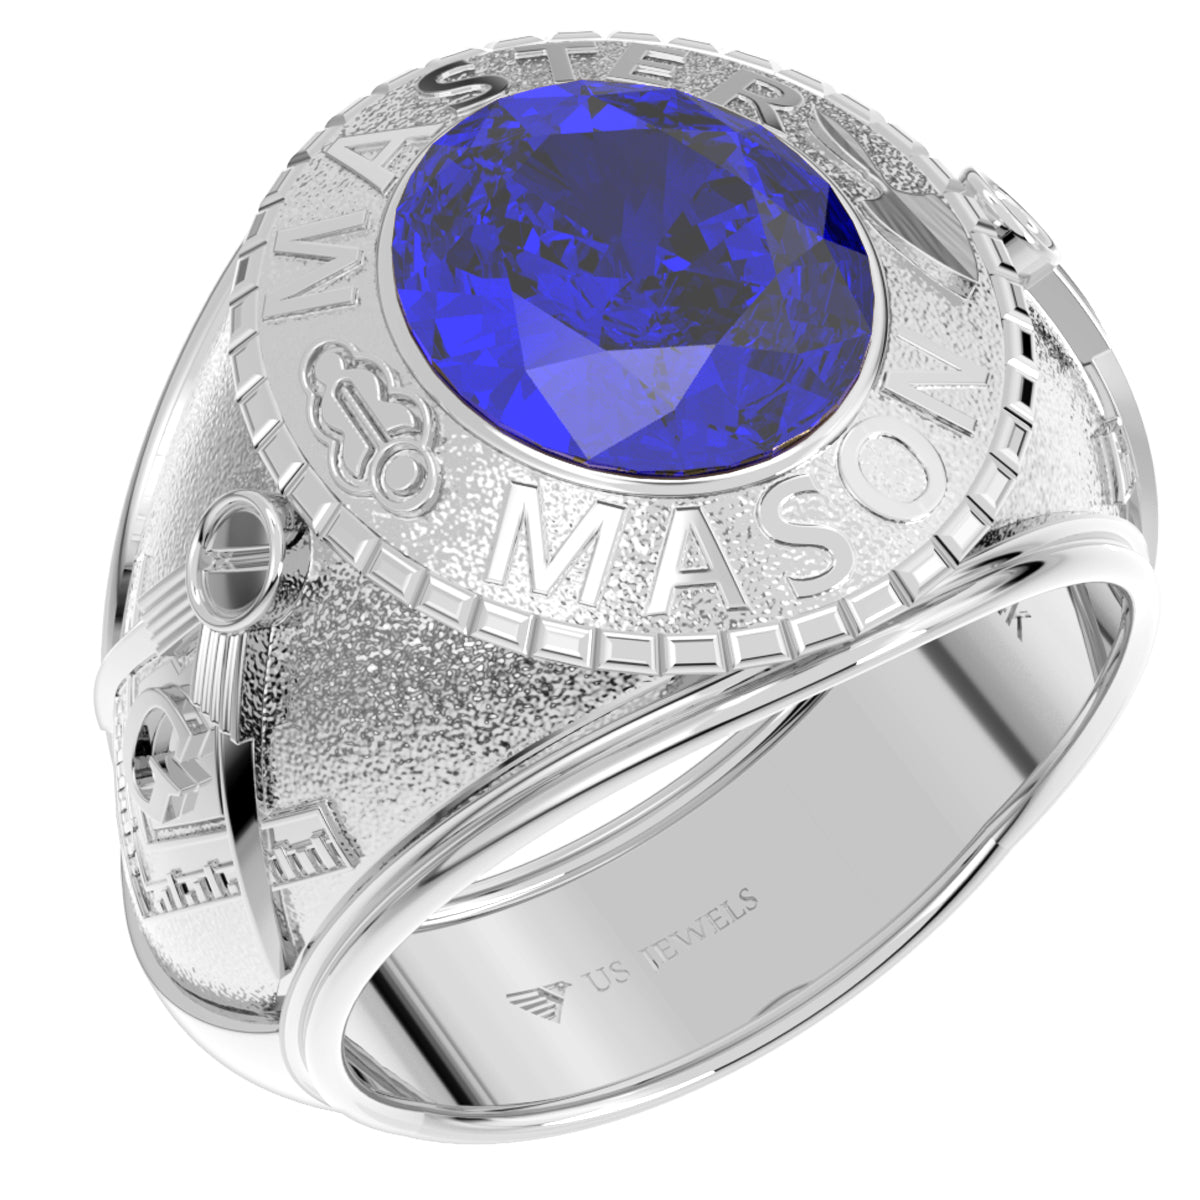 Men's Heavy Solid 925 Sterling Silver Freemason Master Mason Class Ring High Polished